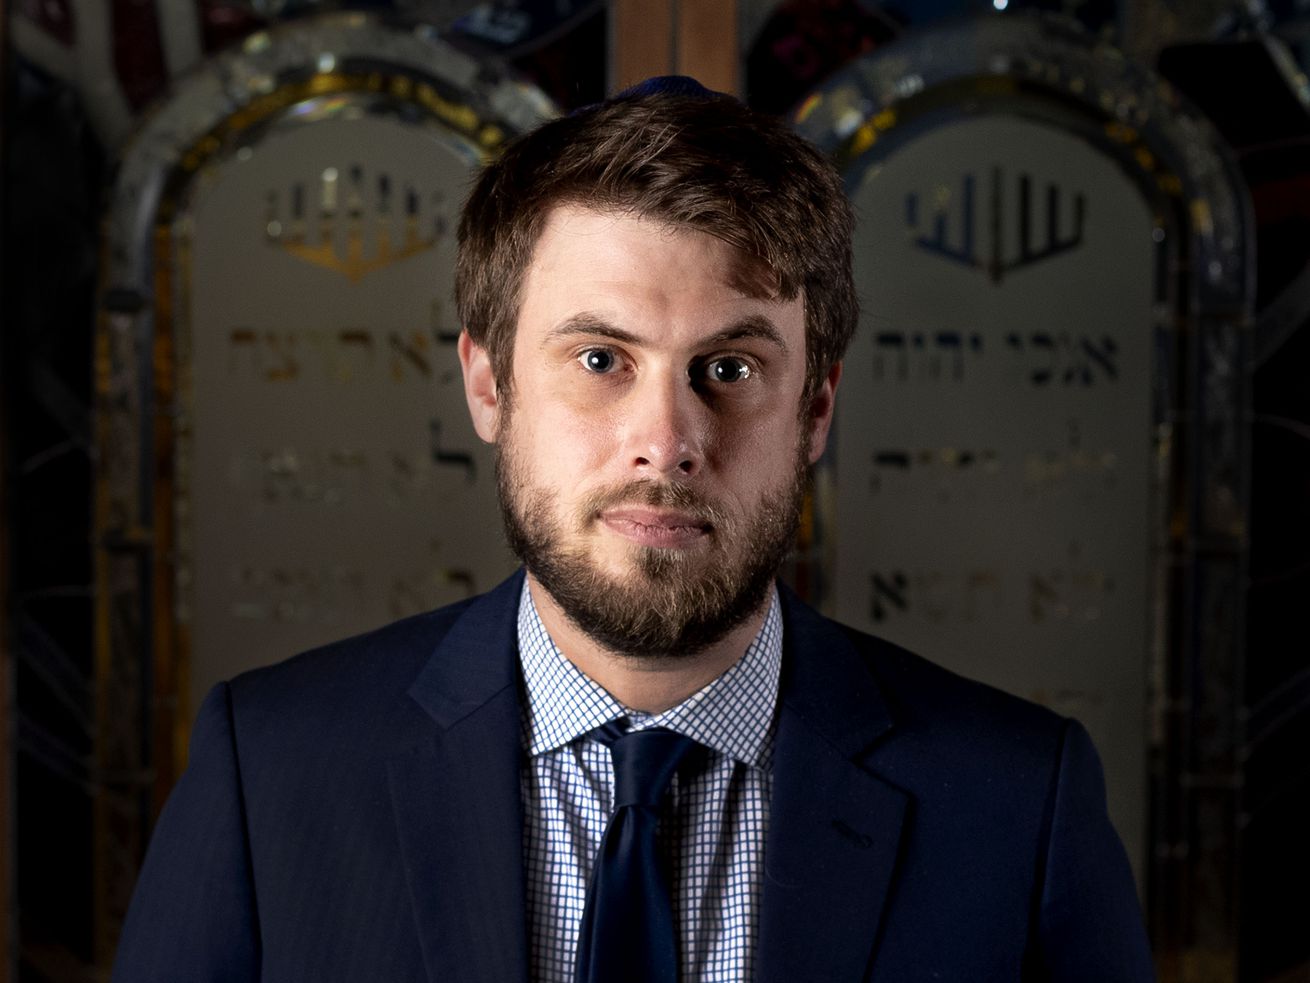 Rabbi Sam Spector of Salt Lake City’s Congregation Kol Ami synagogue.